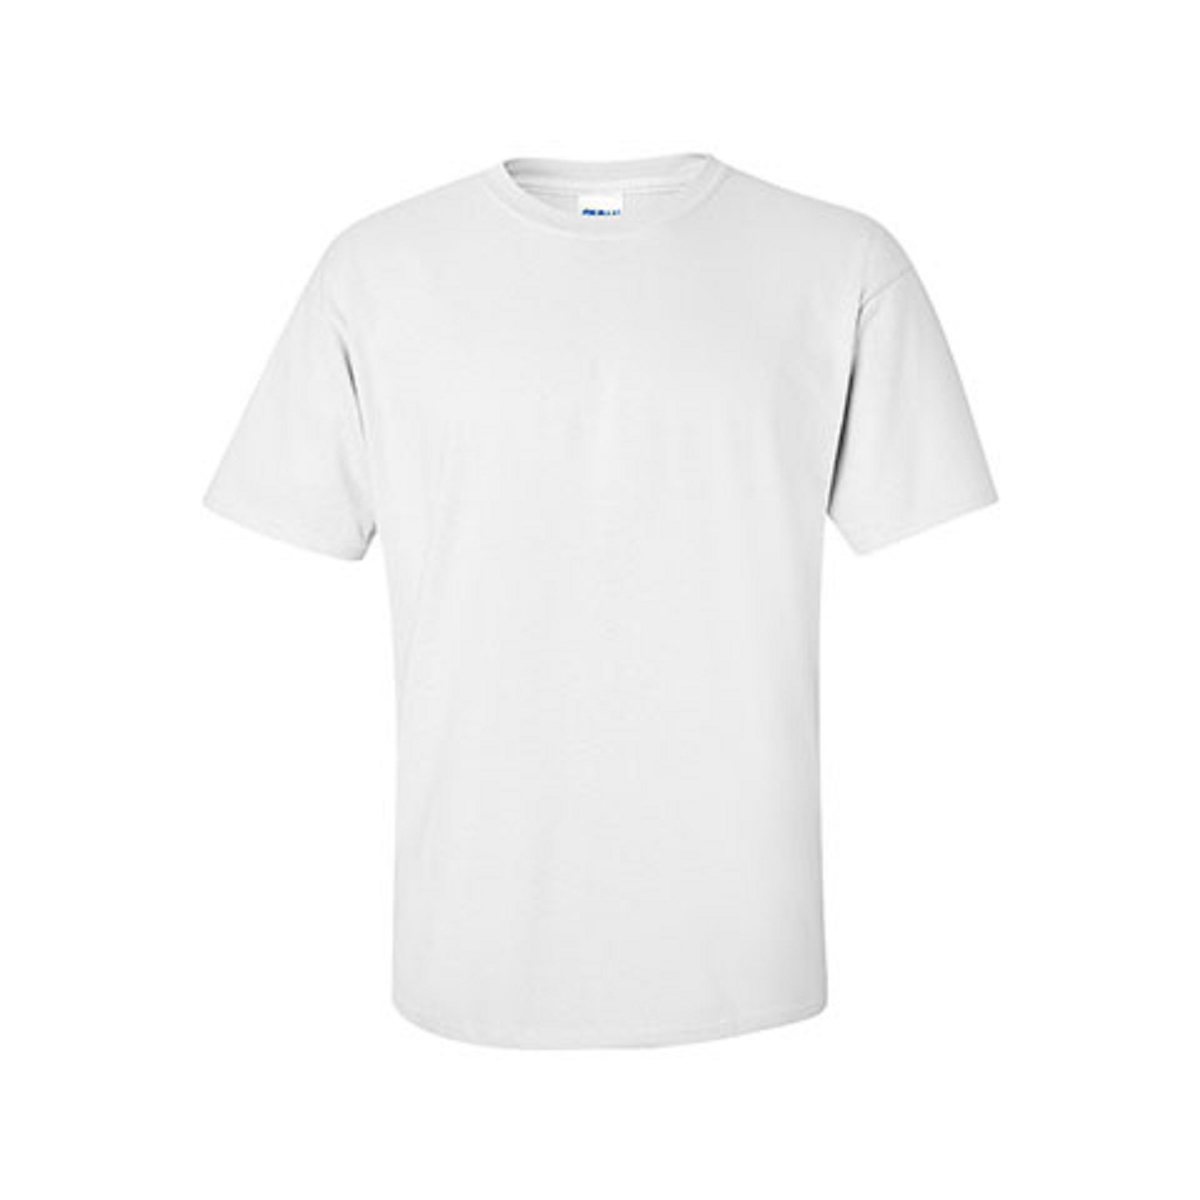 Unisex White T-Shirt